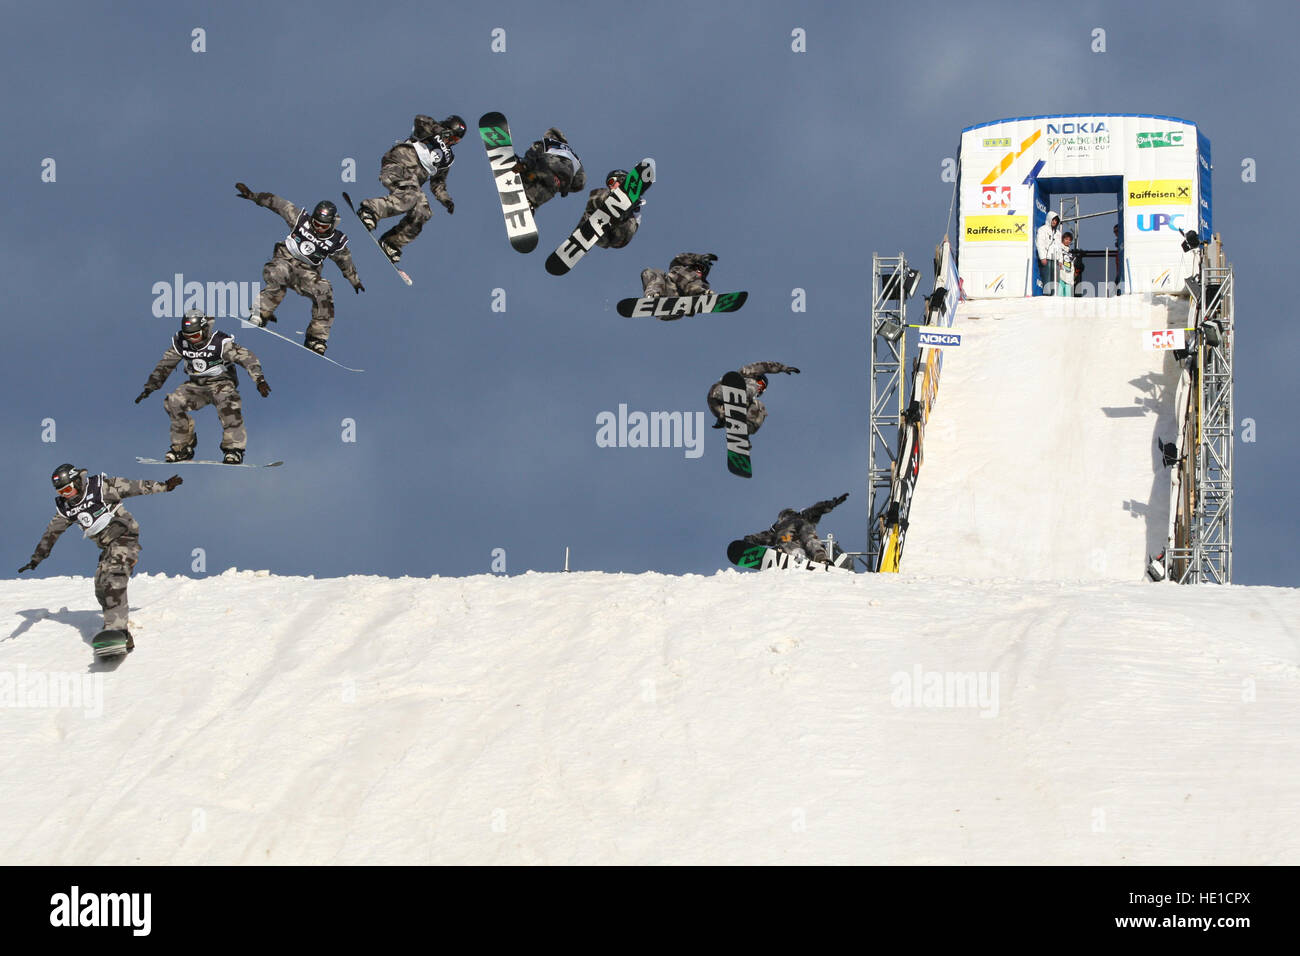 Snowboarder, jump Stock Photo